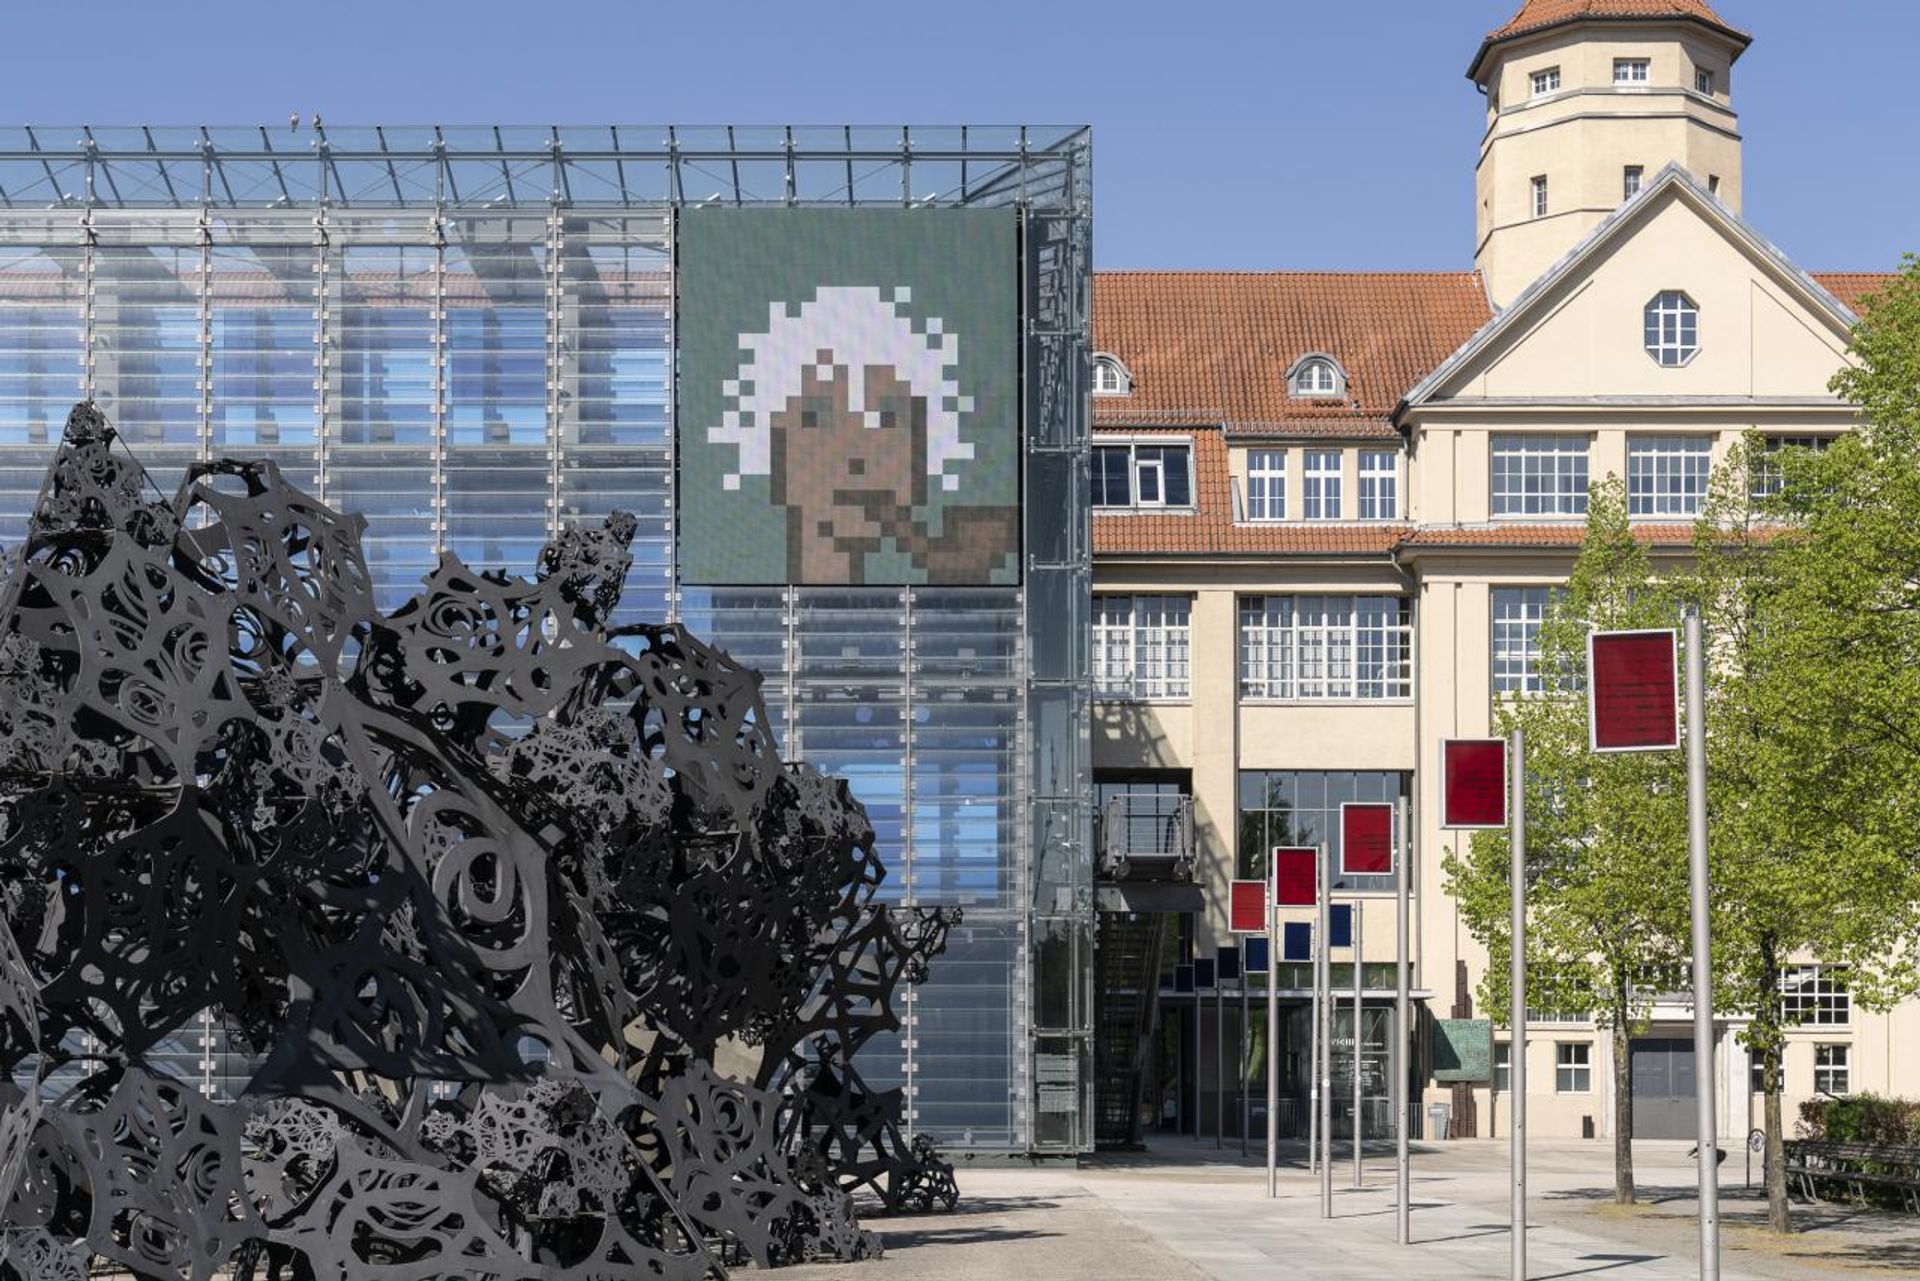 John Watkinson and Matt Hall's Cryptopunk on the facade of ZKM, Karlsruhe